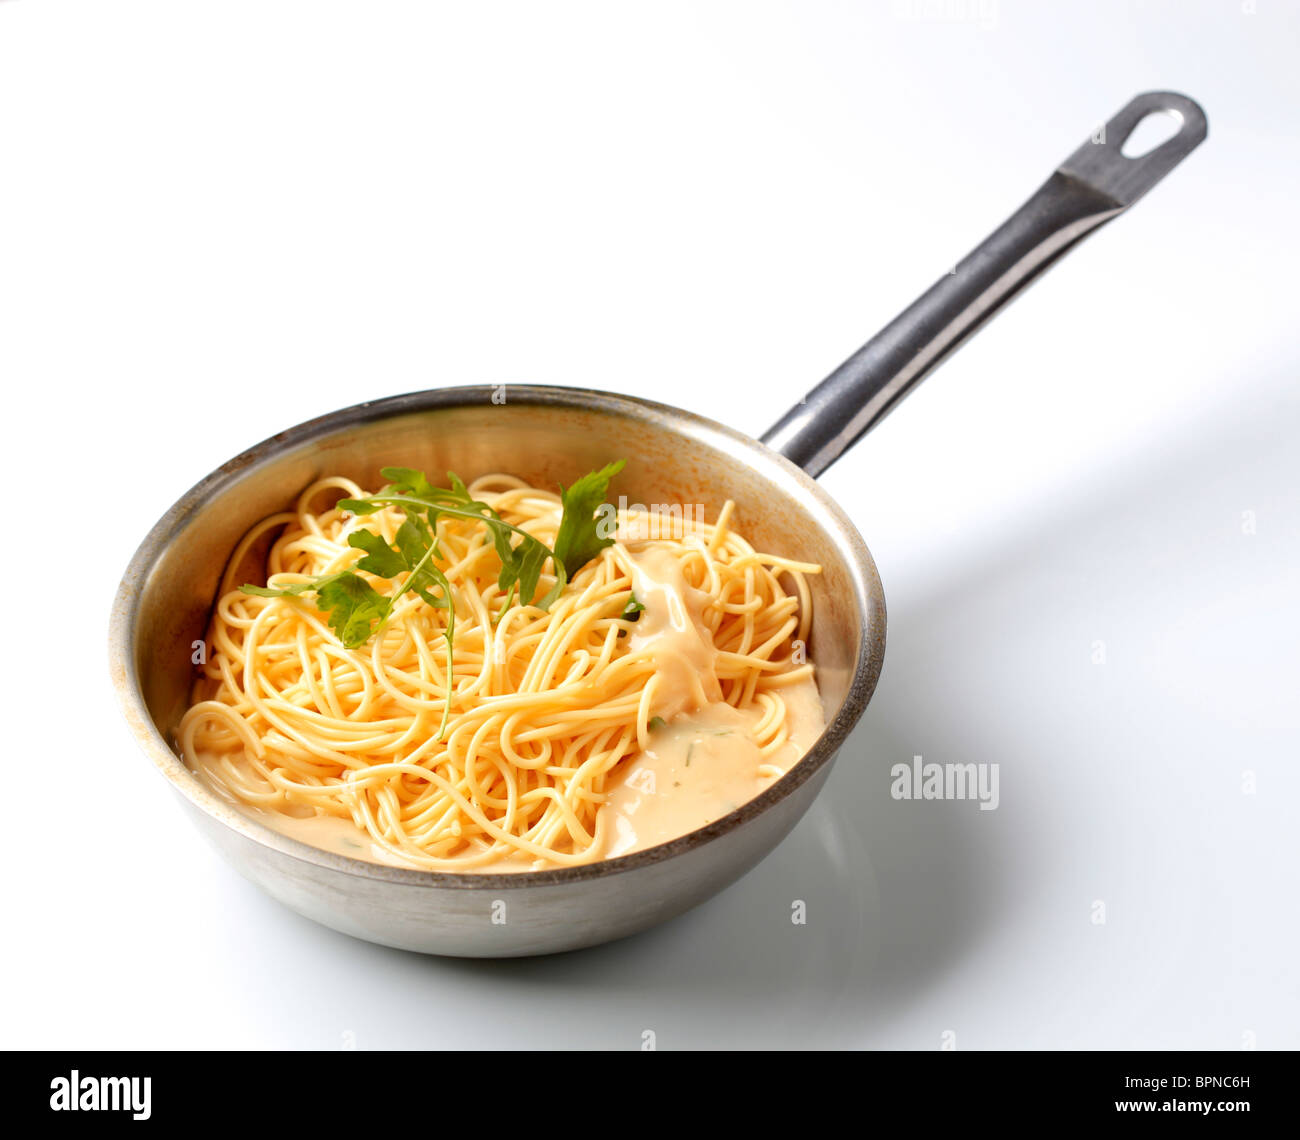 Spaghetti and cheese sauce in a saucepan Stock Photo